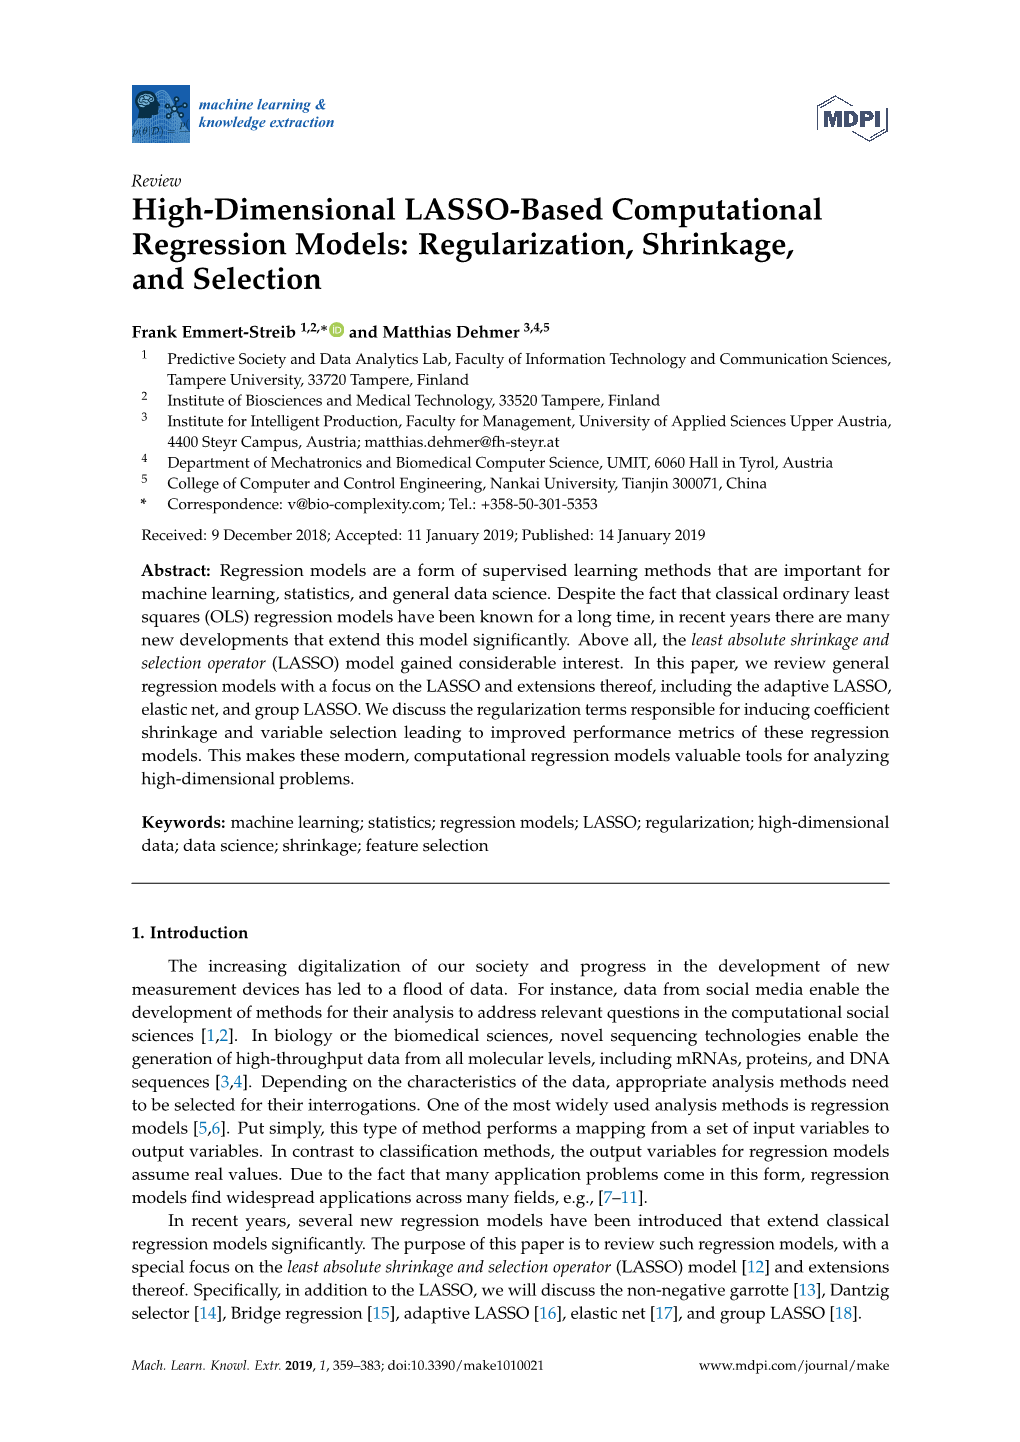 High-Dimensional LASSO-Based Computational Regression Models: Regularization, Shrinkage, and Selection